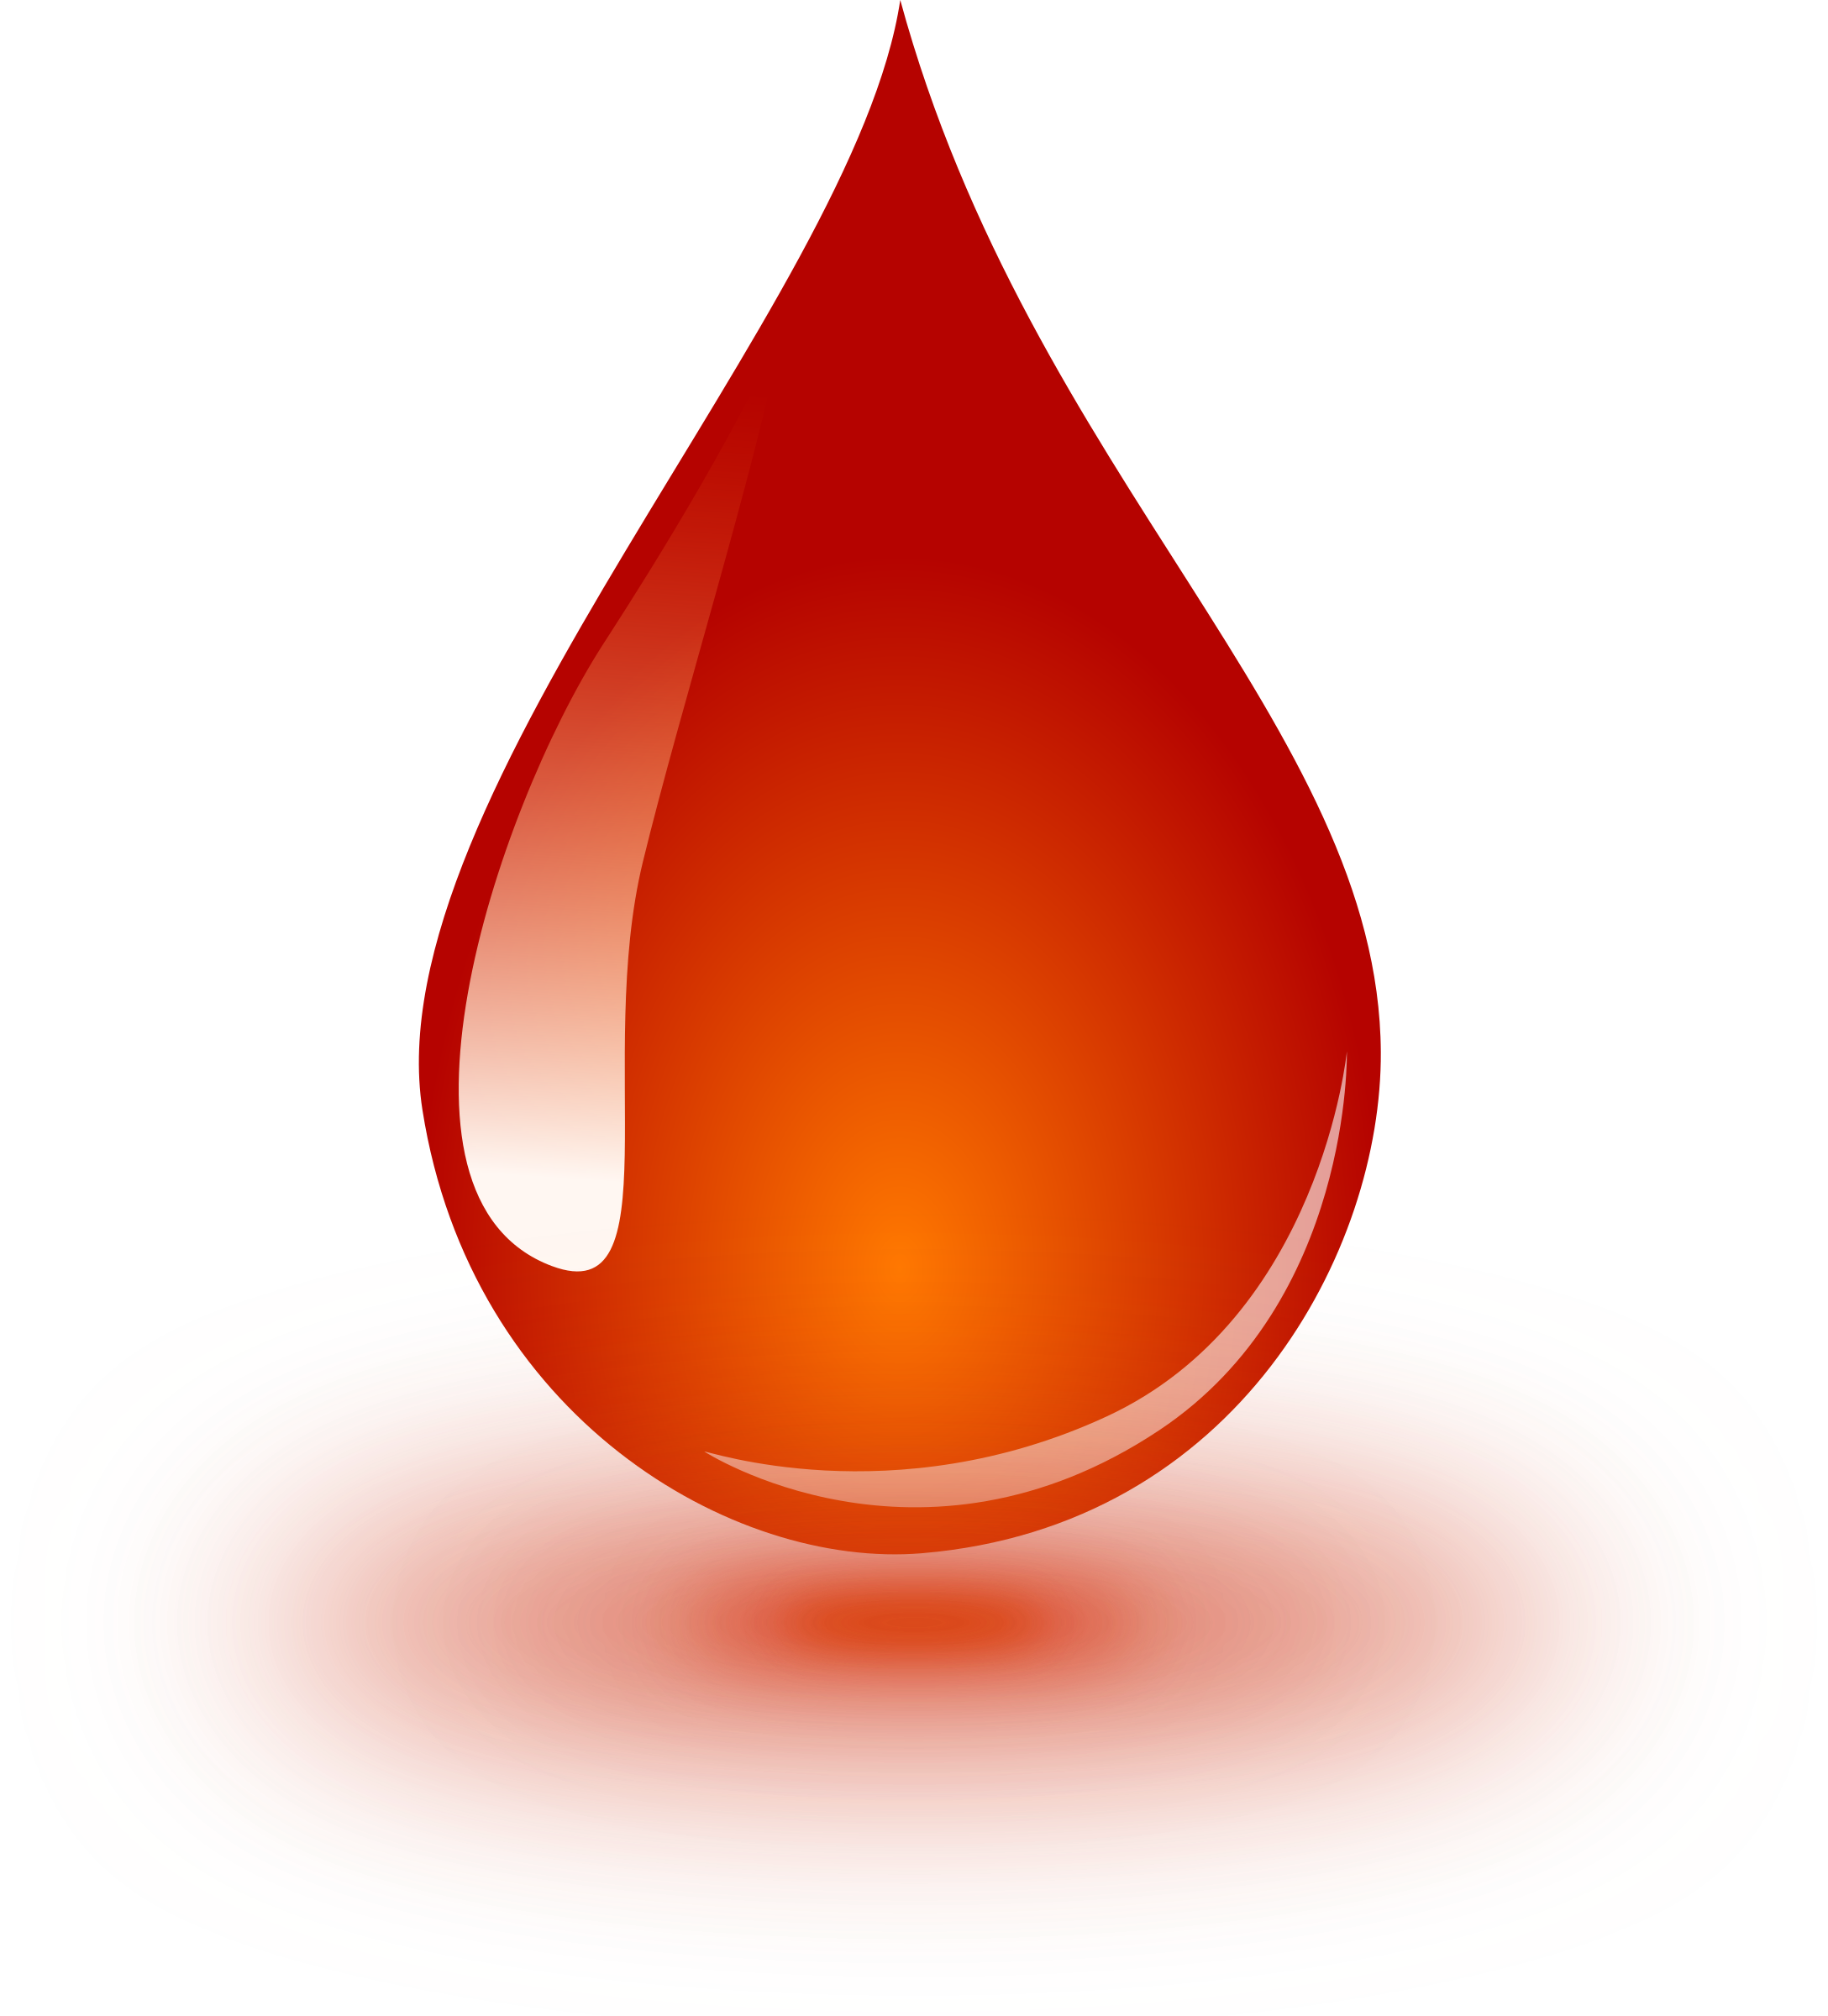 Blood Drop PNG Images, Transparent Blood Drop Clipart - Free